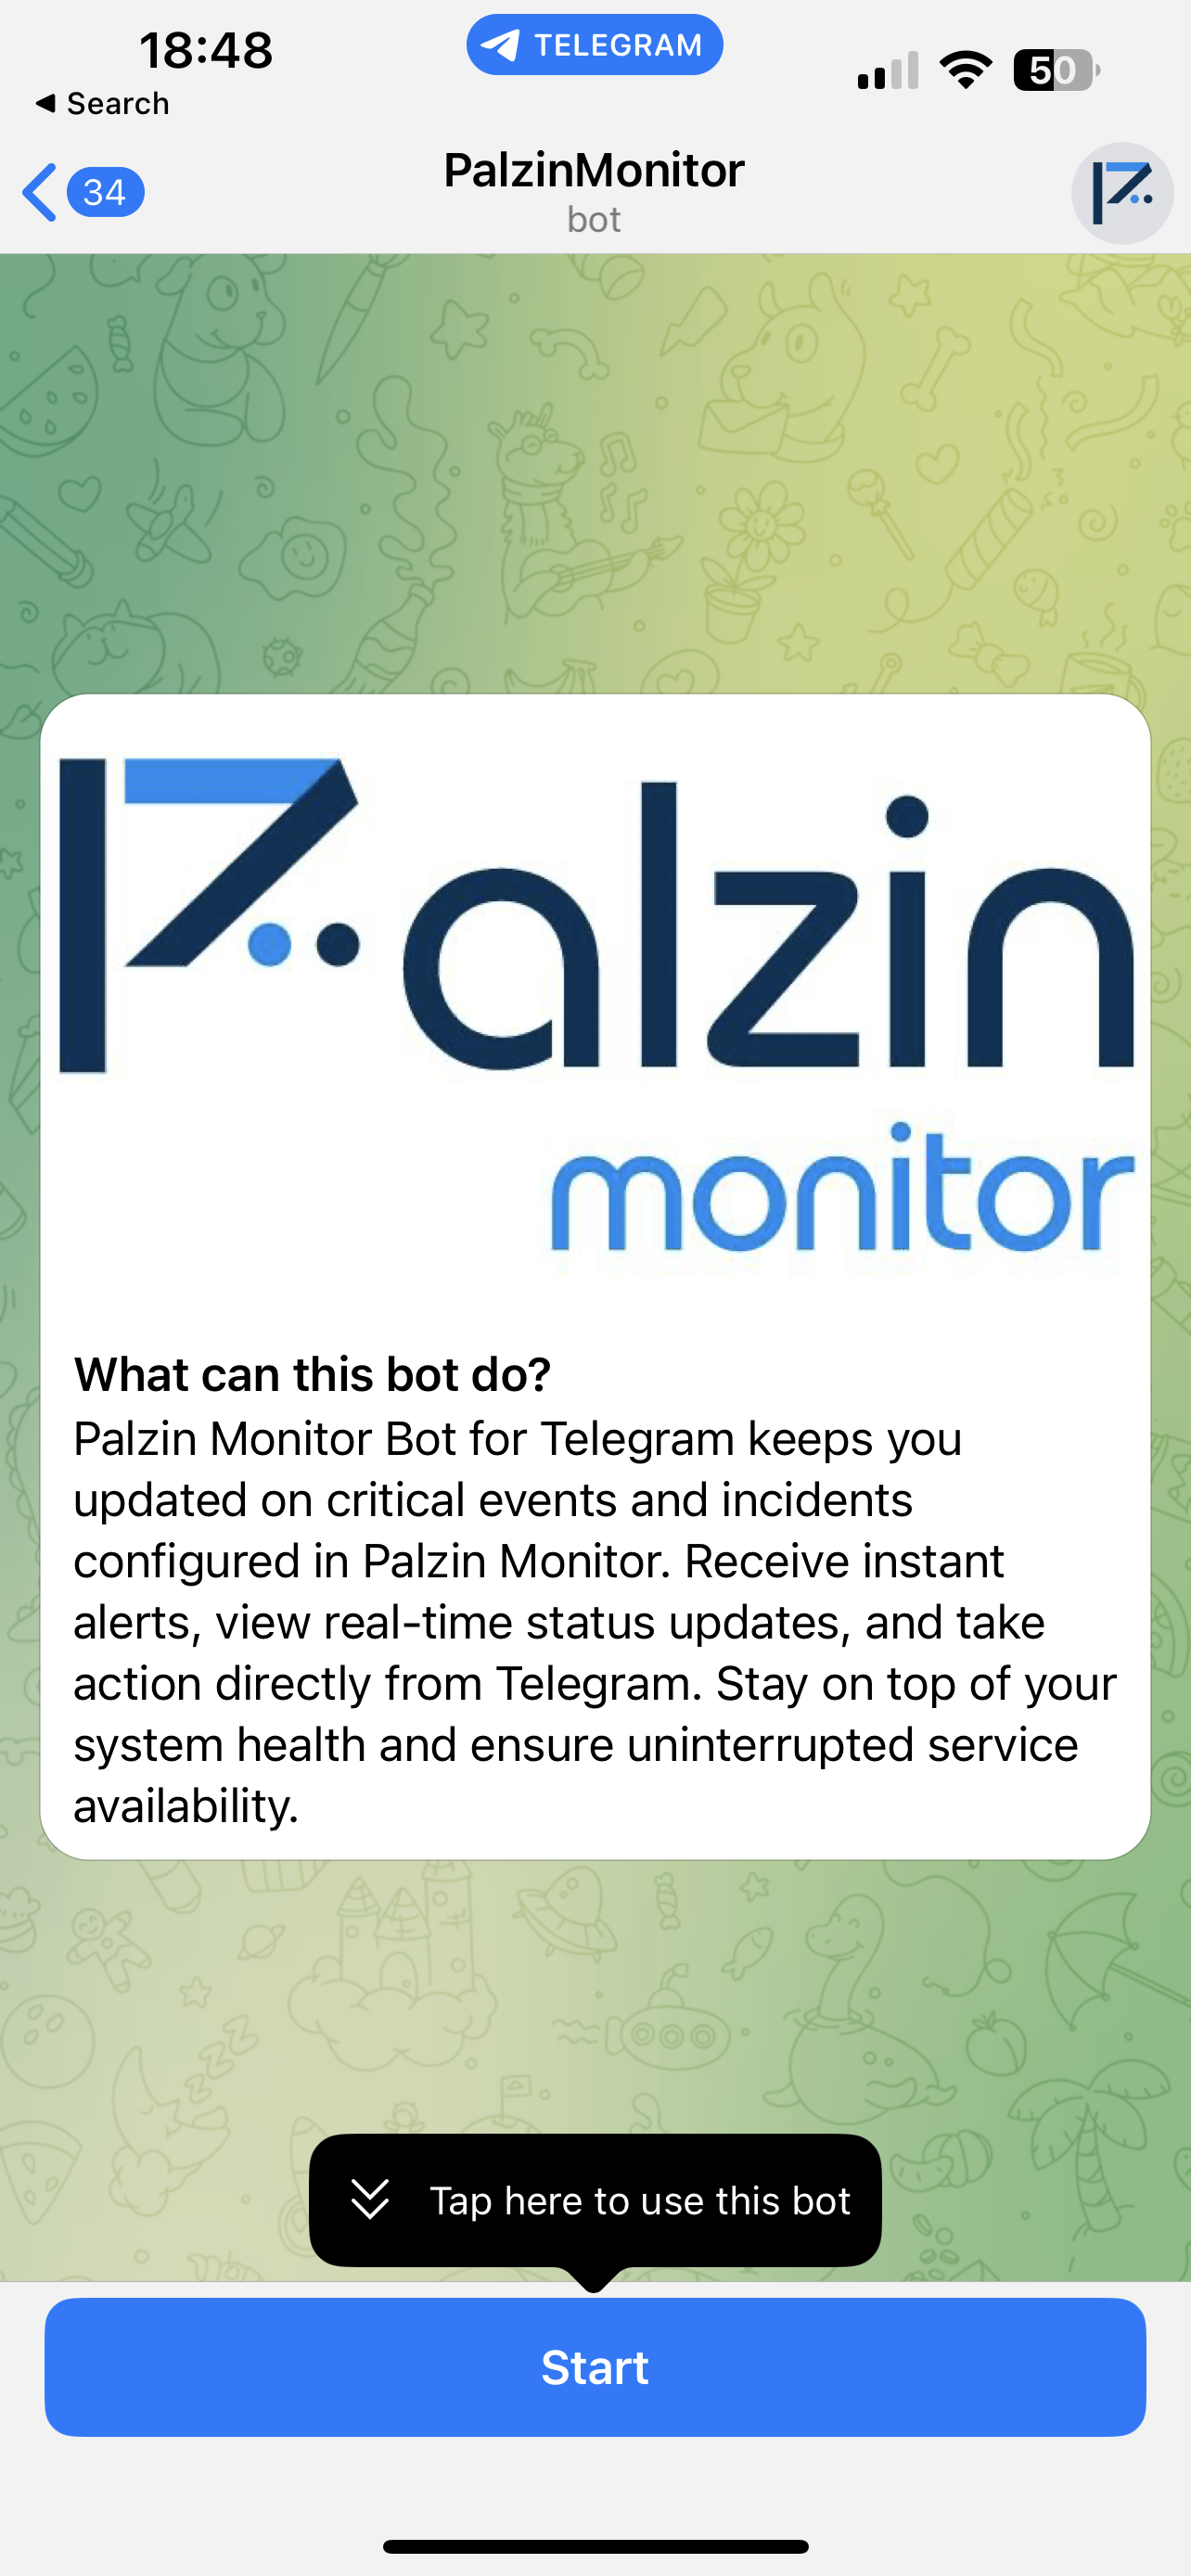 Start Chat with Palzin Monitor Bot